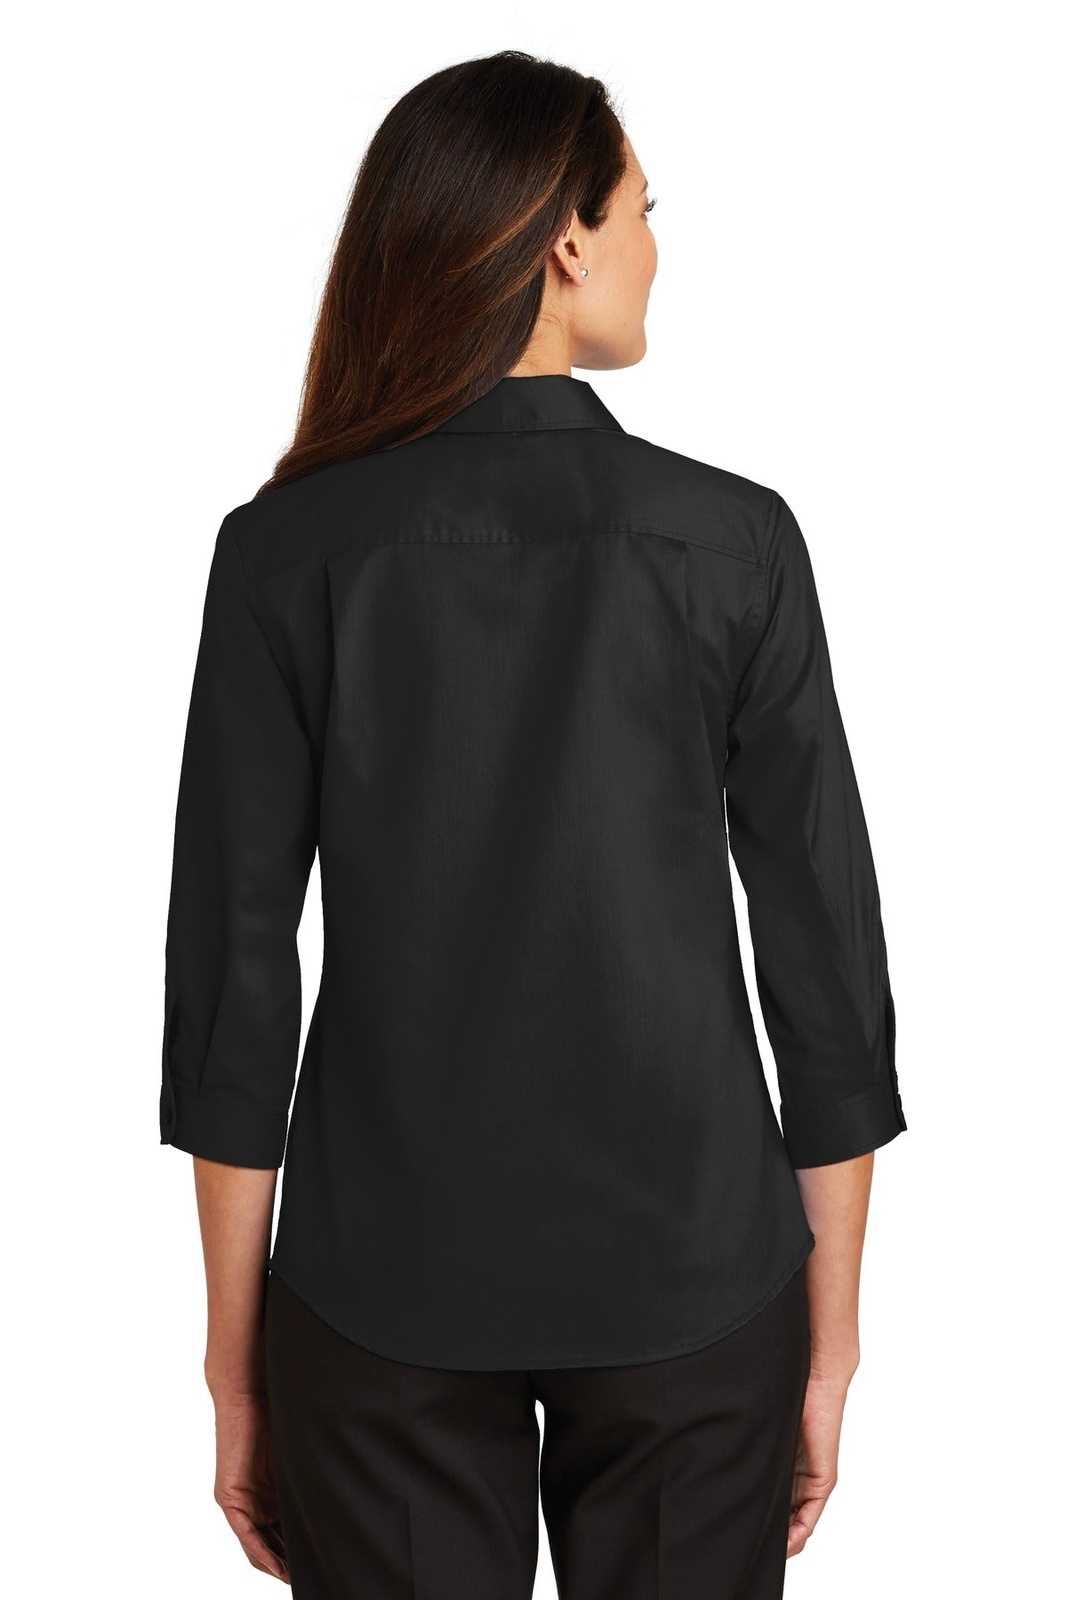 Port Authority L665 Ladies 3/4-Sleeve Superpro Twill Shirt - Black - HIT a Double - 2